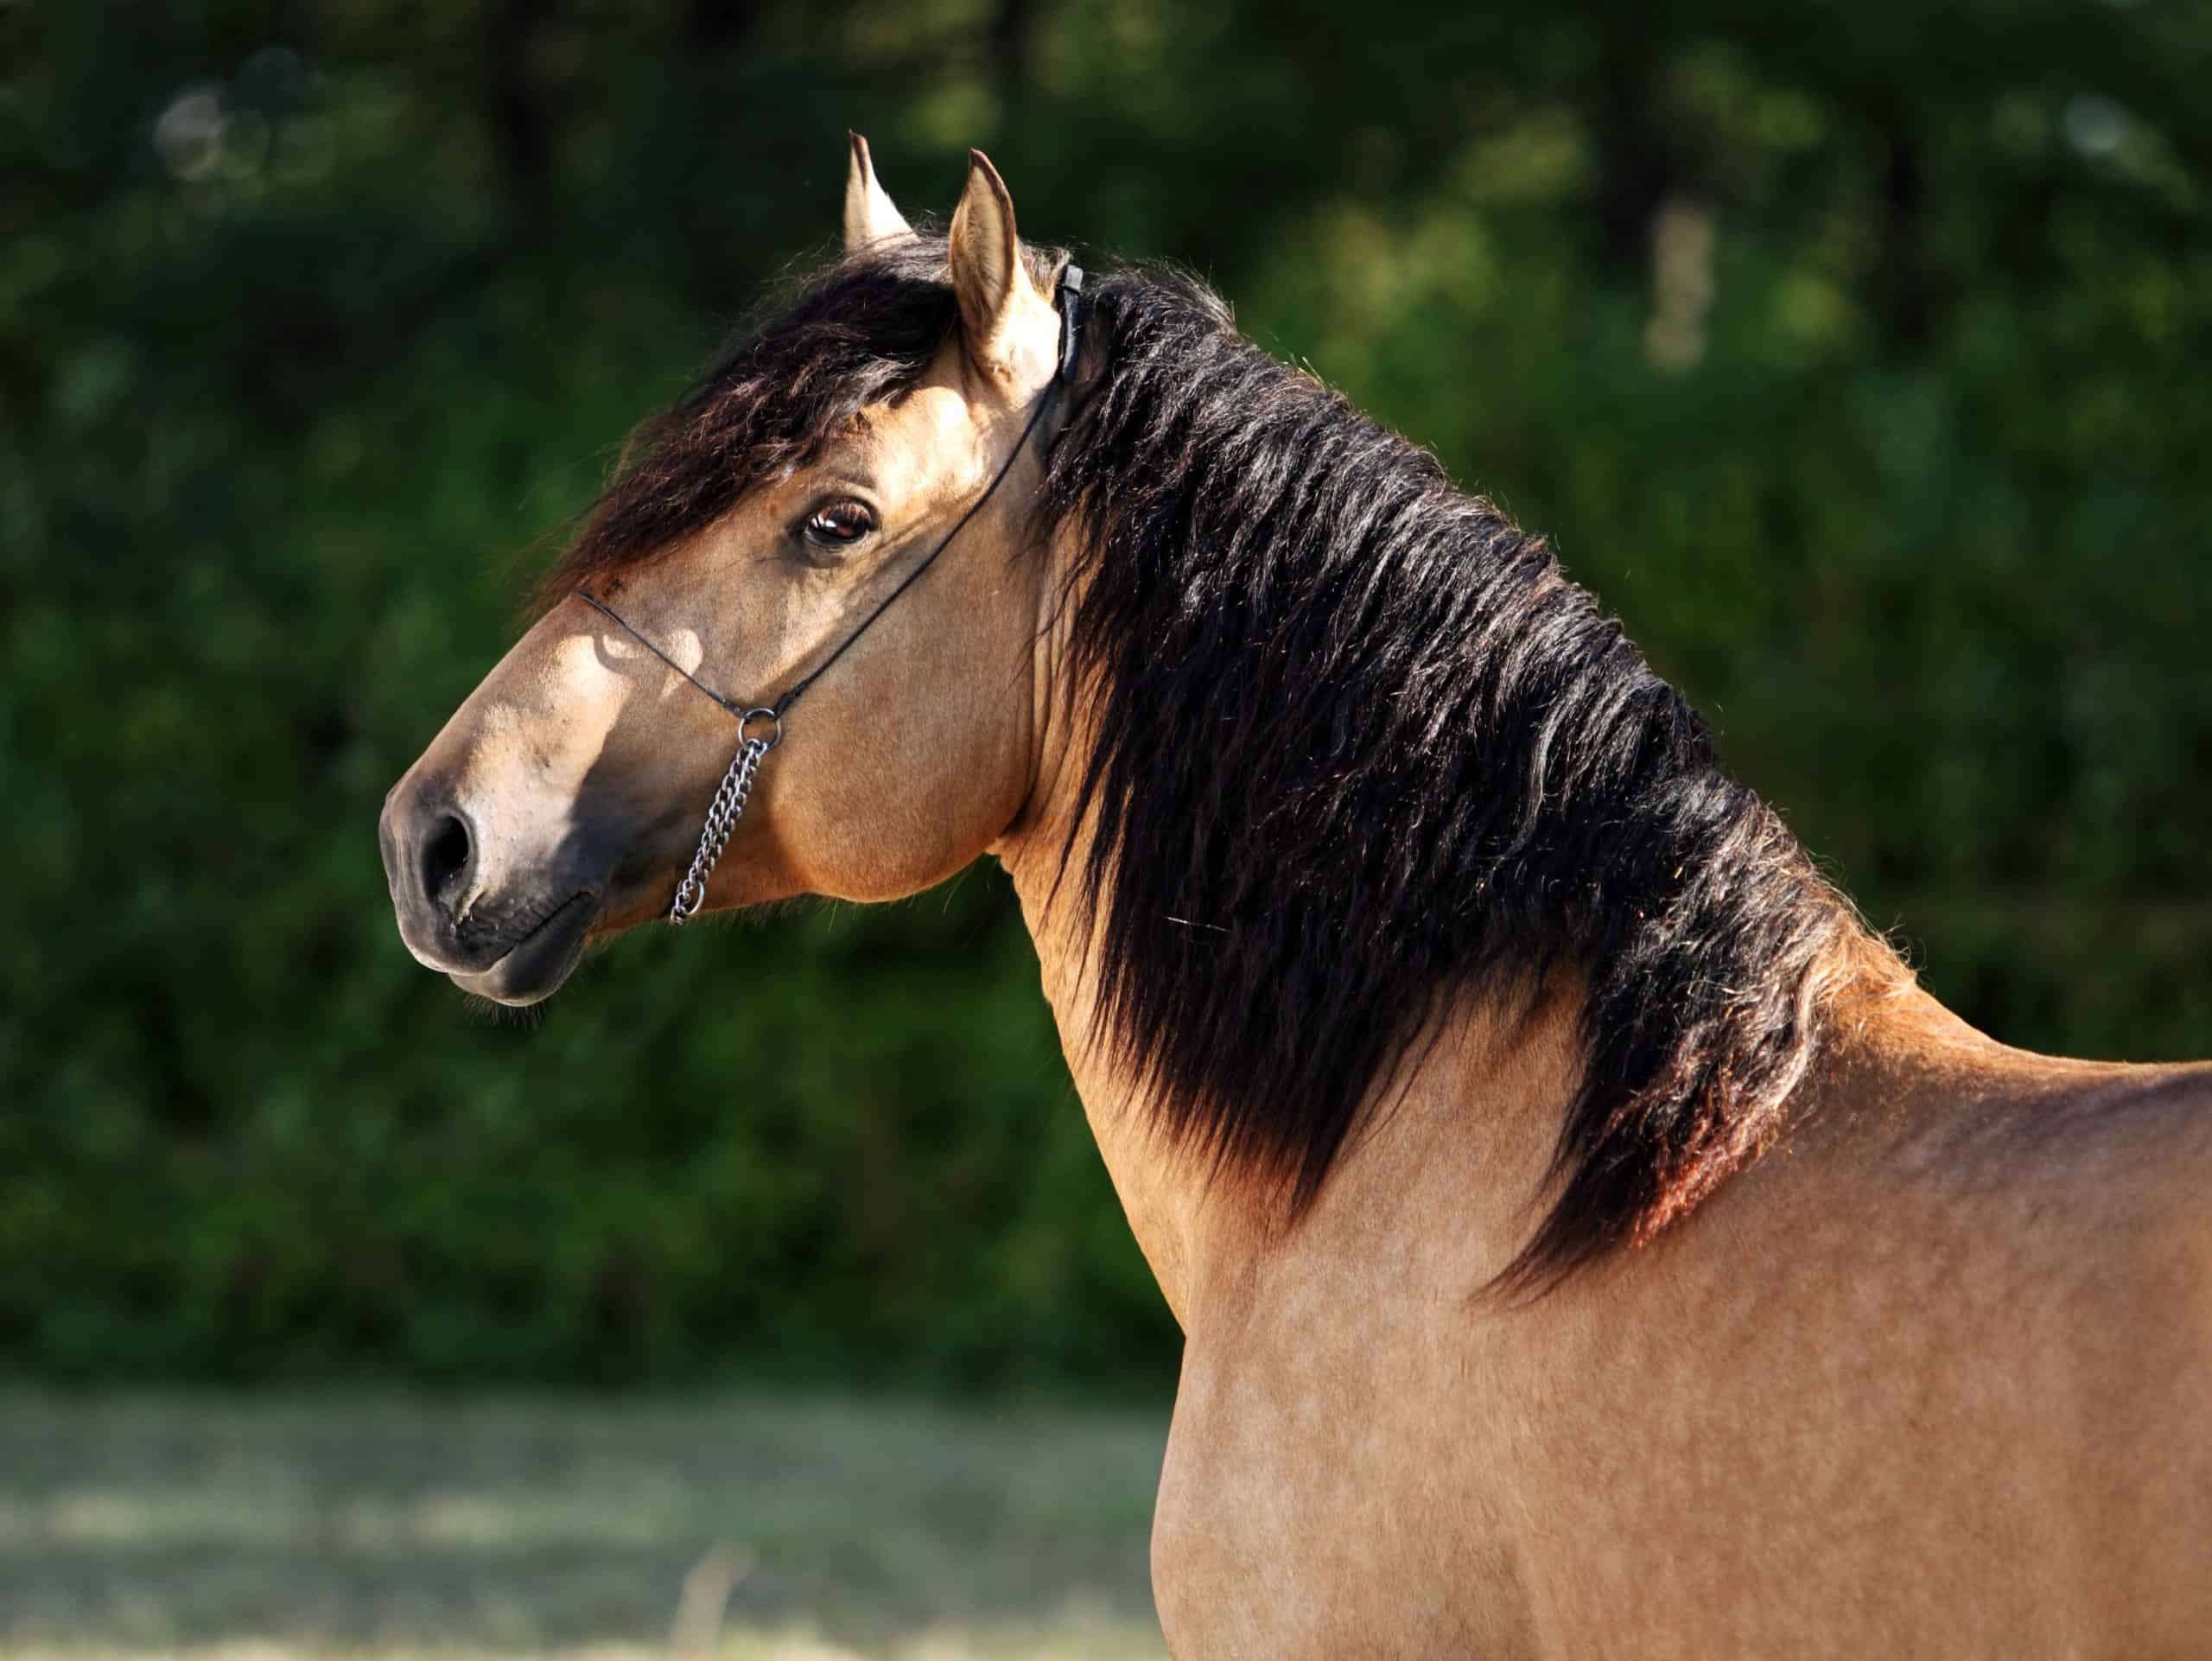 Gypsy Vanner Horse stallion portrait in evening stud farm